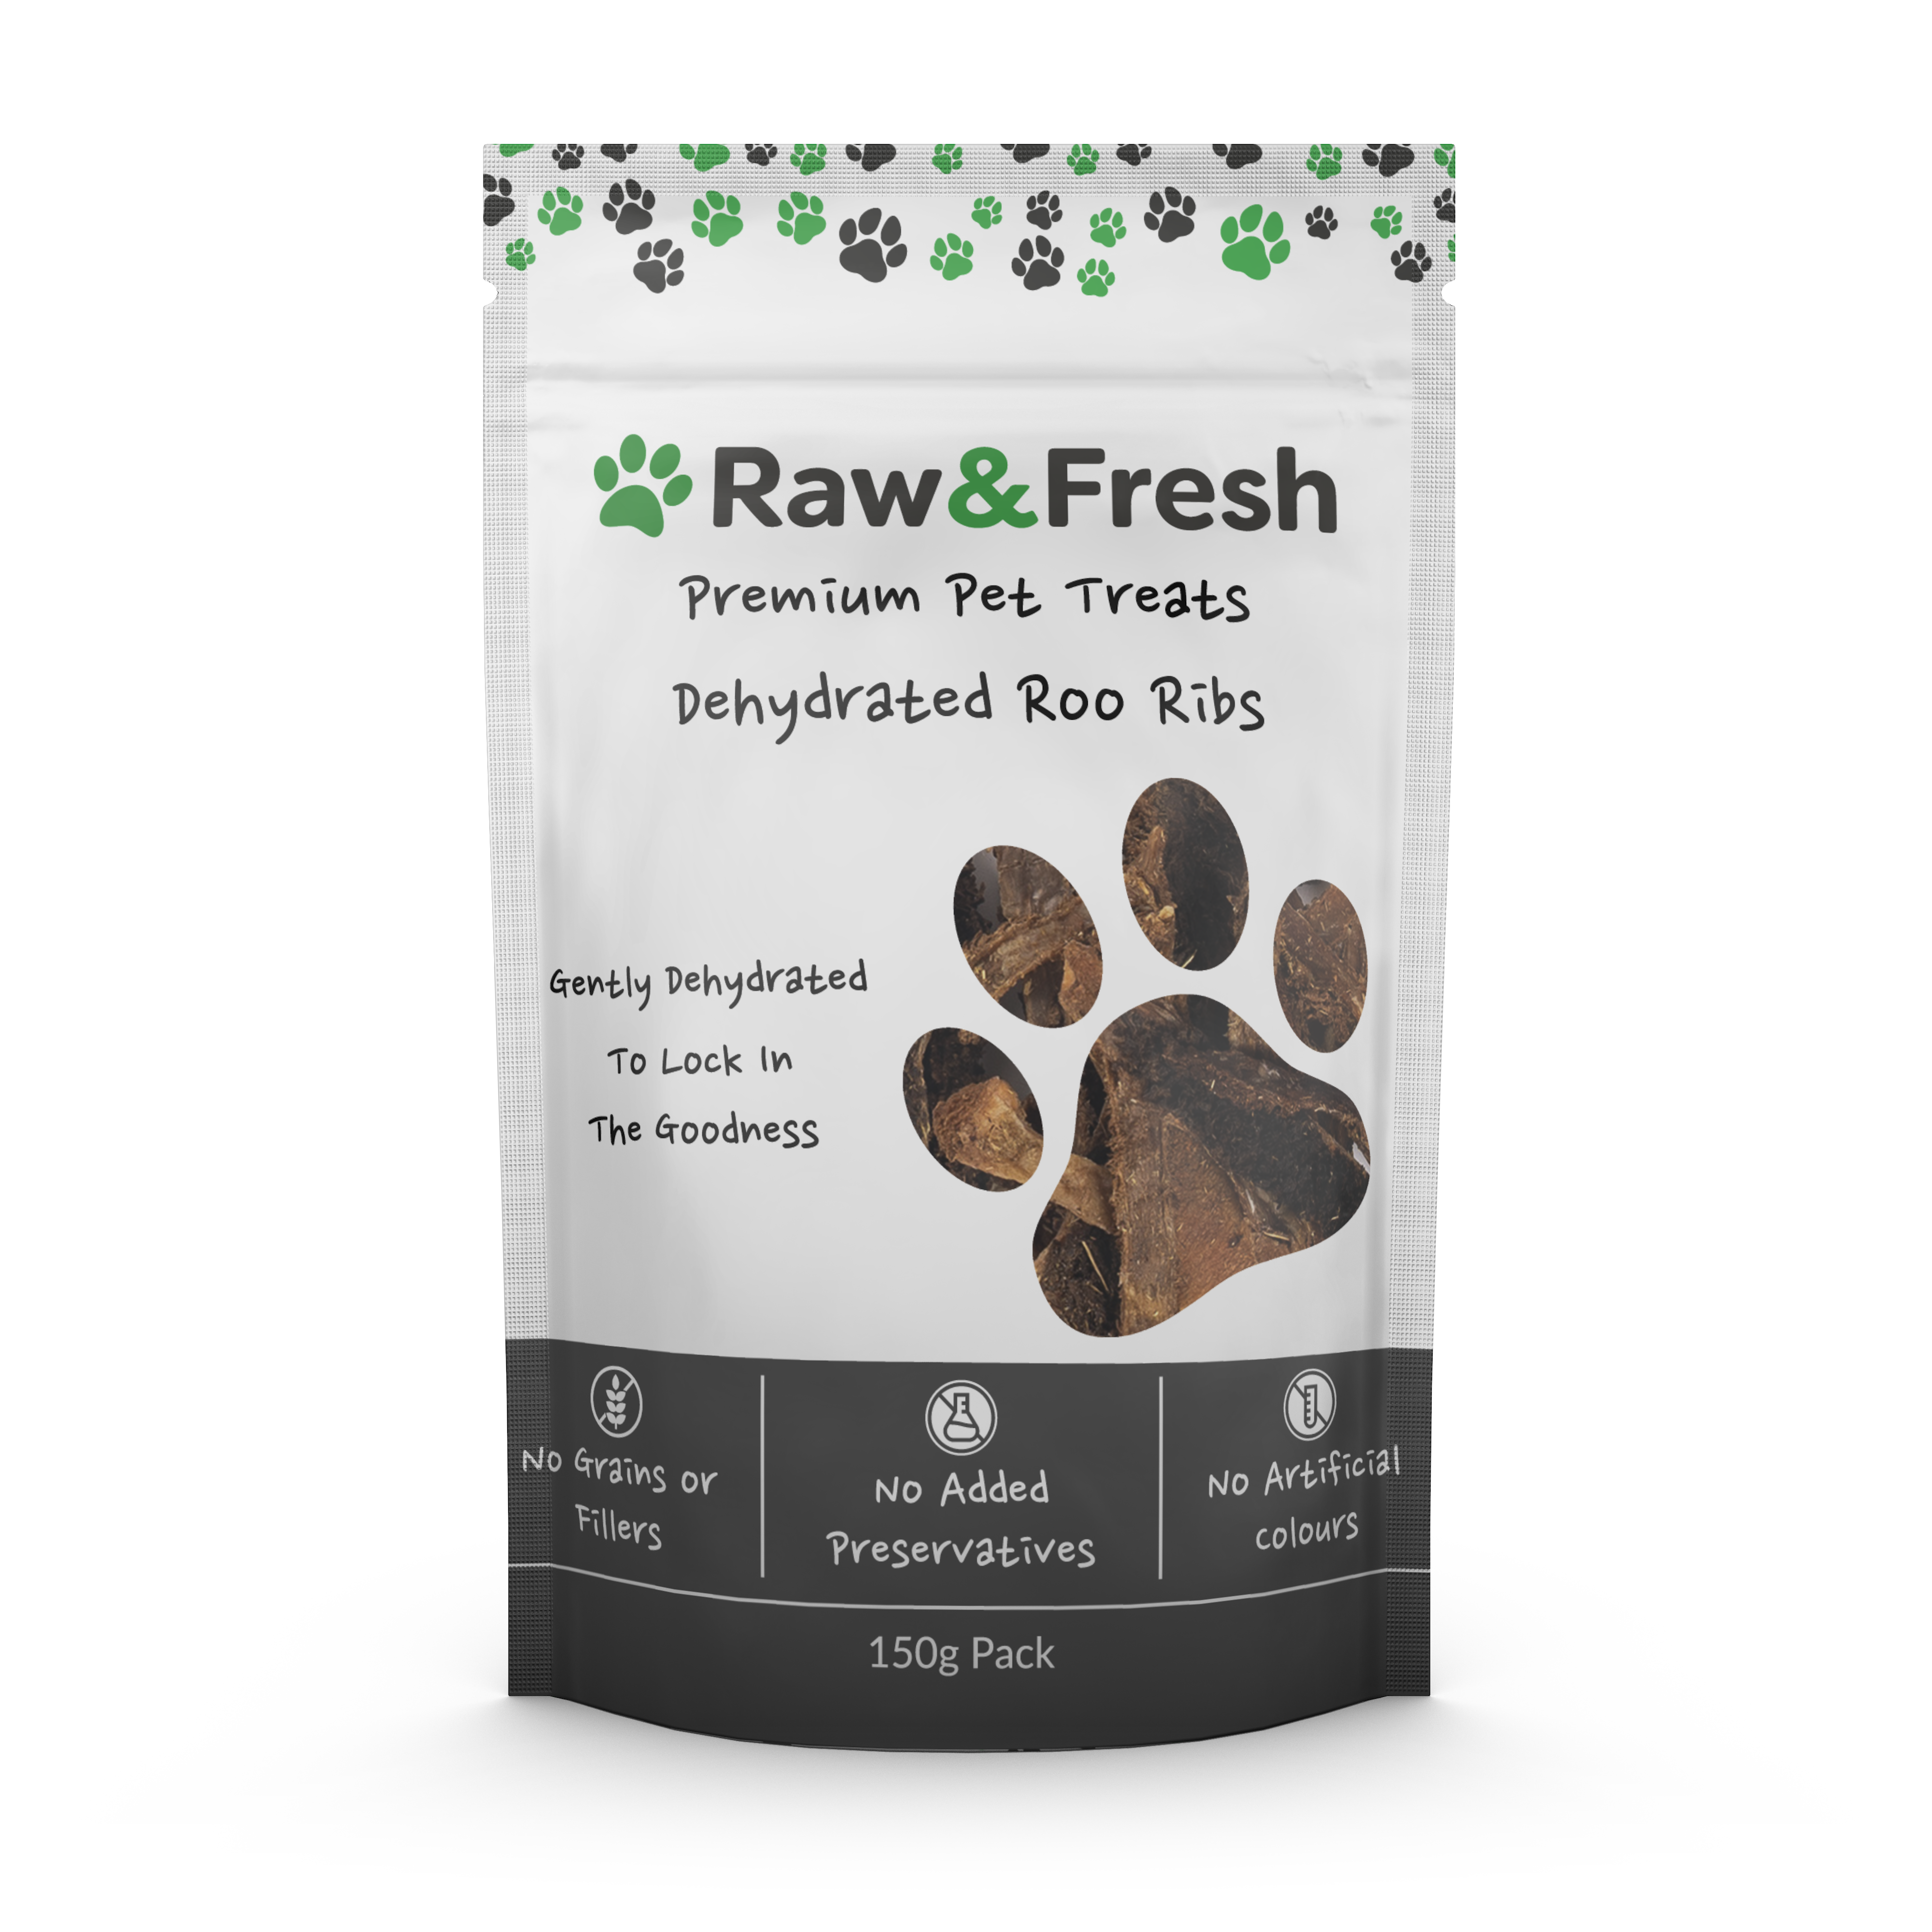 Raw & Fresh Dehydrated Kangaroo Ribs Dog Treats 150g Pack